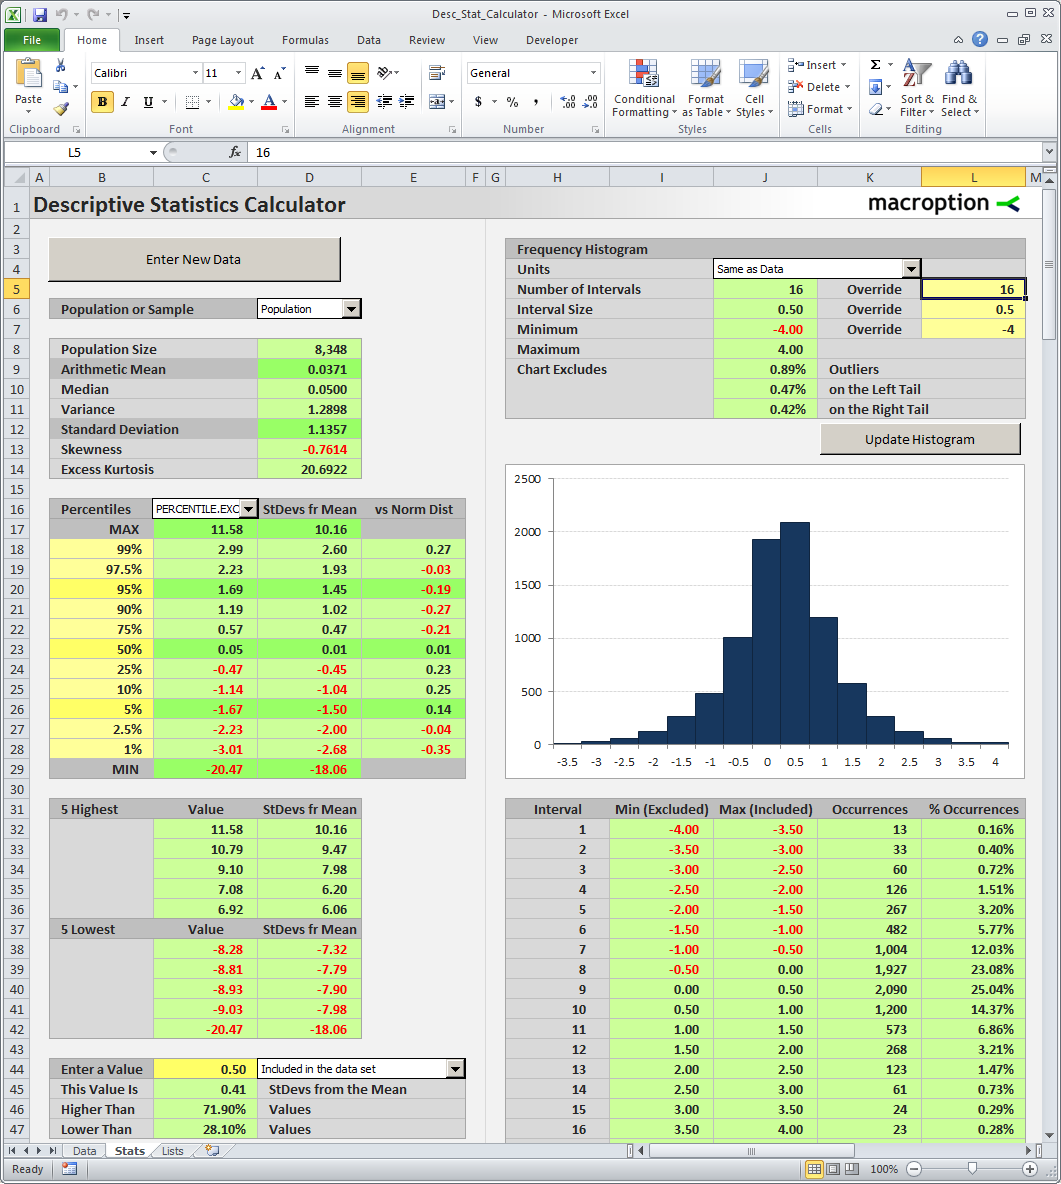 Descriptive Statistics Calculator - the main sheet